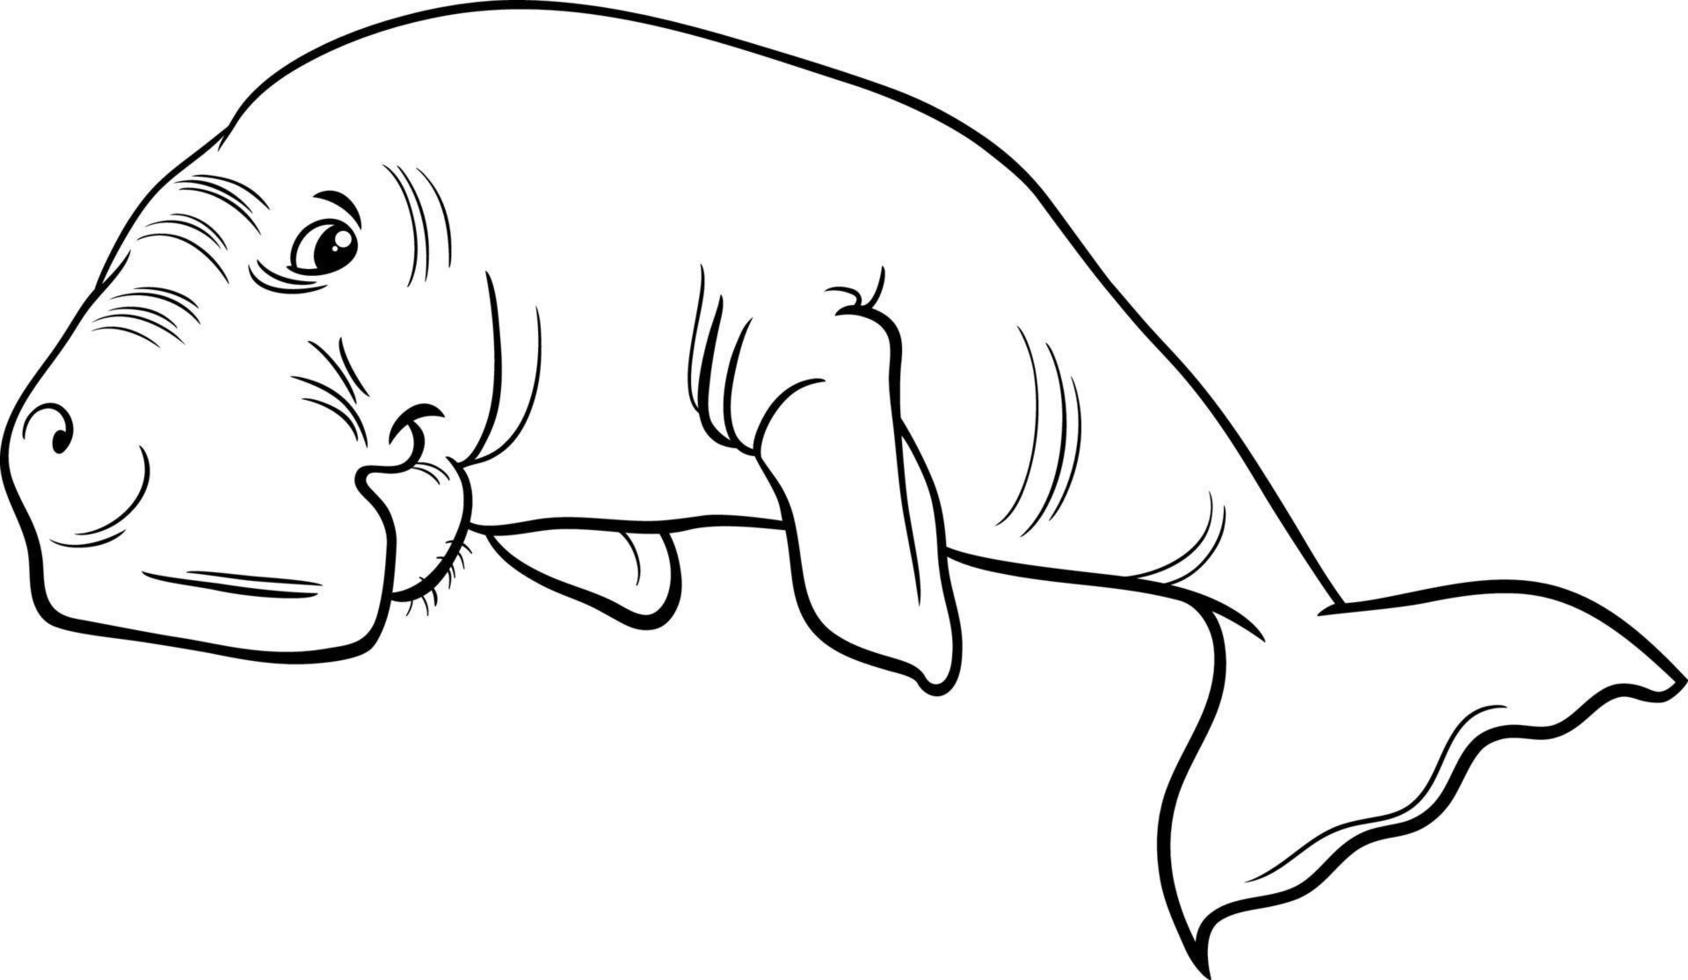 cartoon dugong animal character coloring book page vector